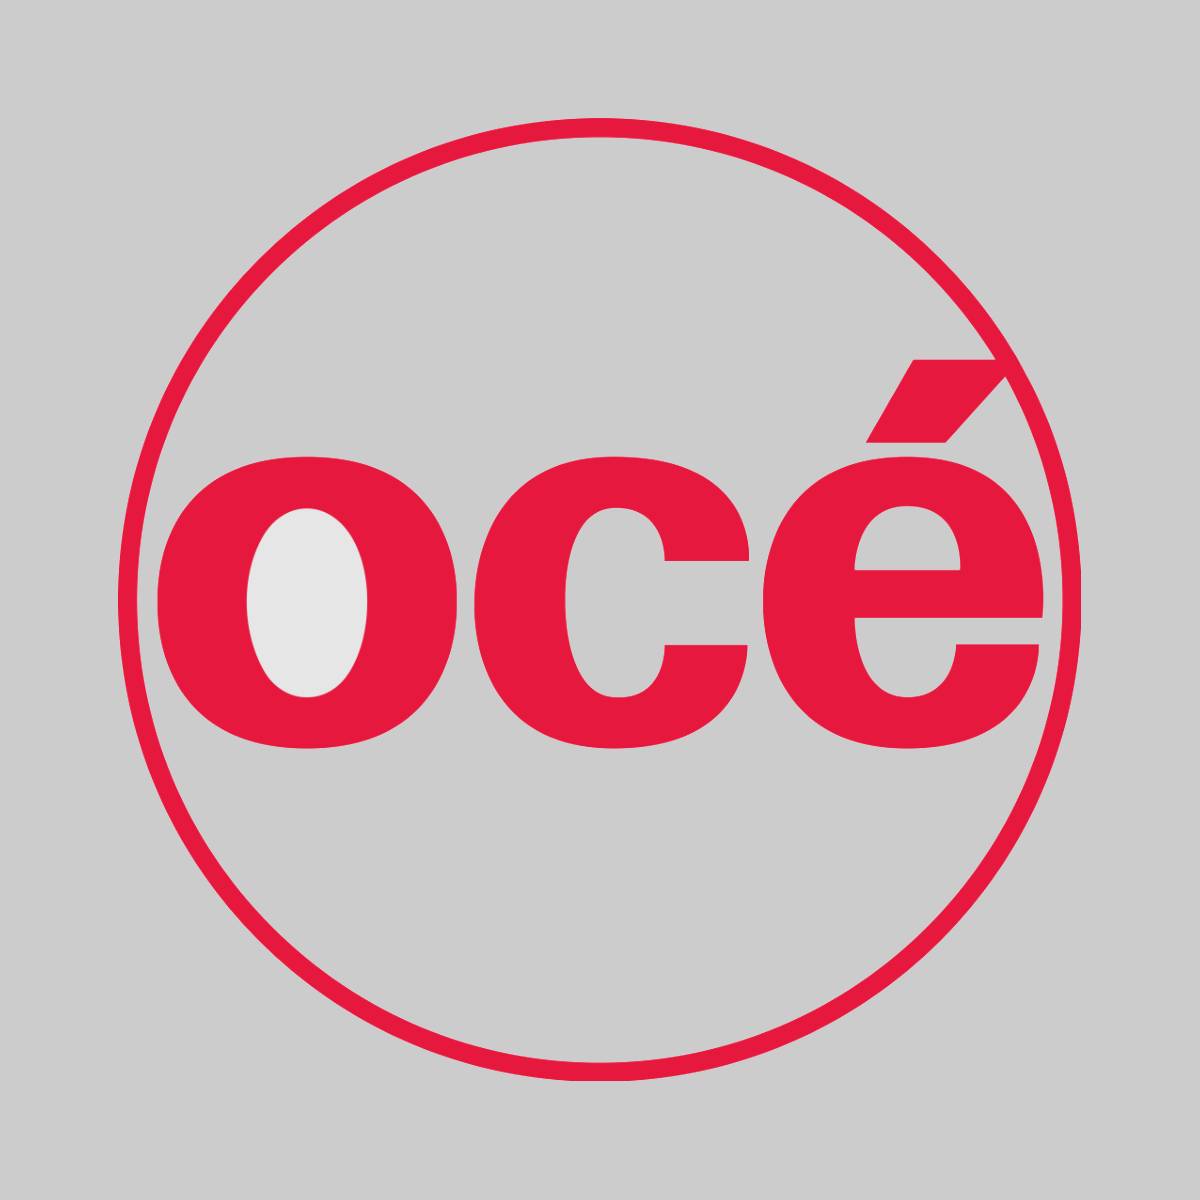 Originele OCE-nietcassette 29701465 voor Oce CPS-700 CPS-900 NEU OVP